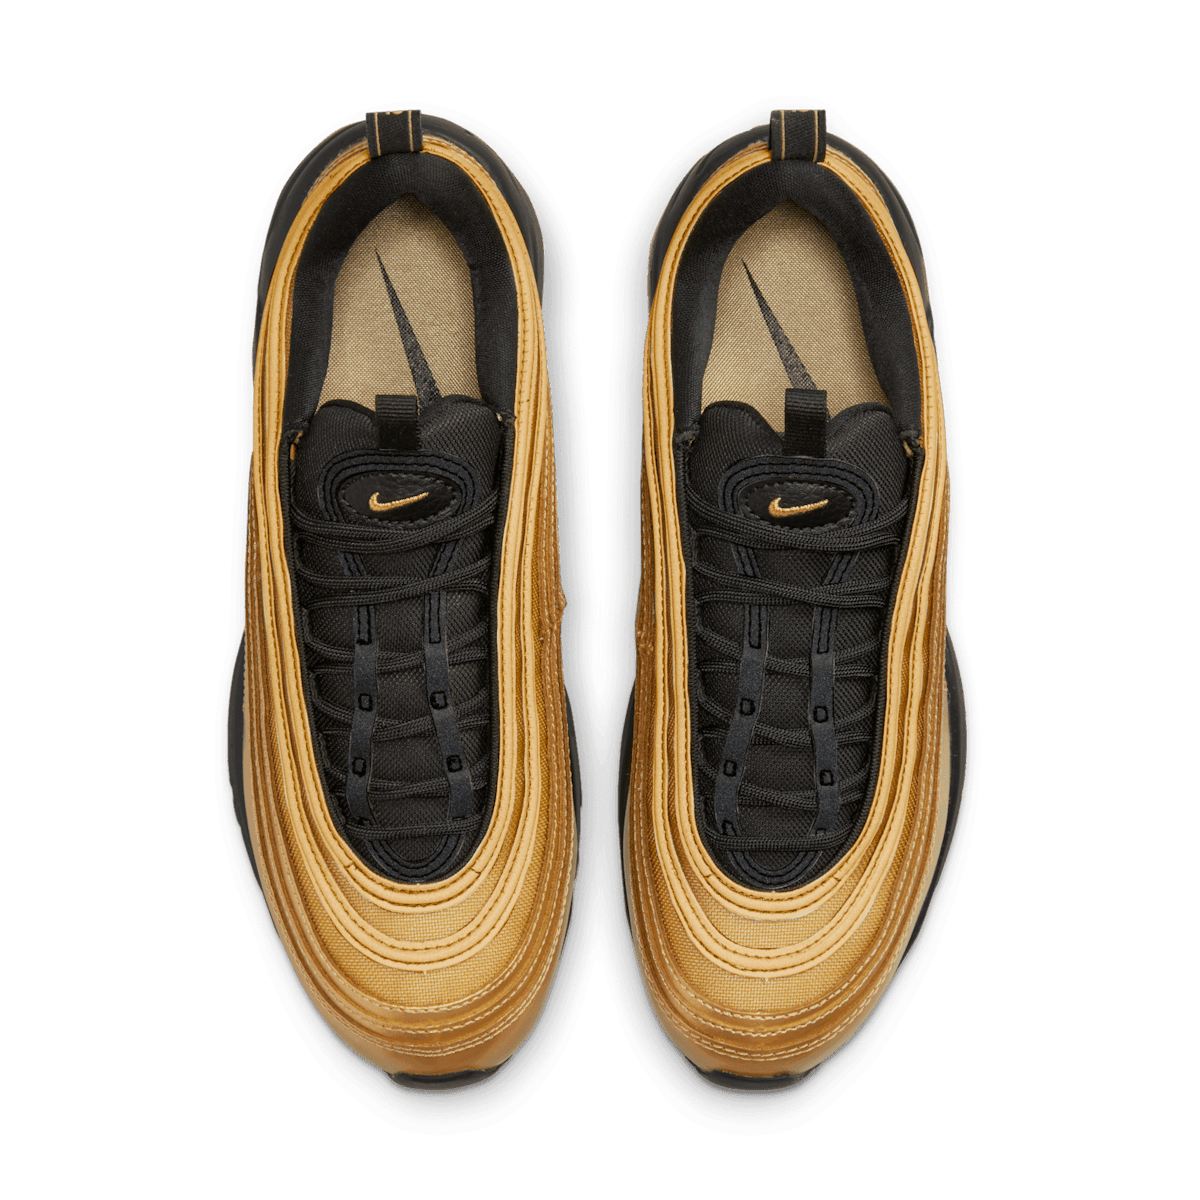 Nike Air Max 97 Metallic Gold Black (W) Angle 1